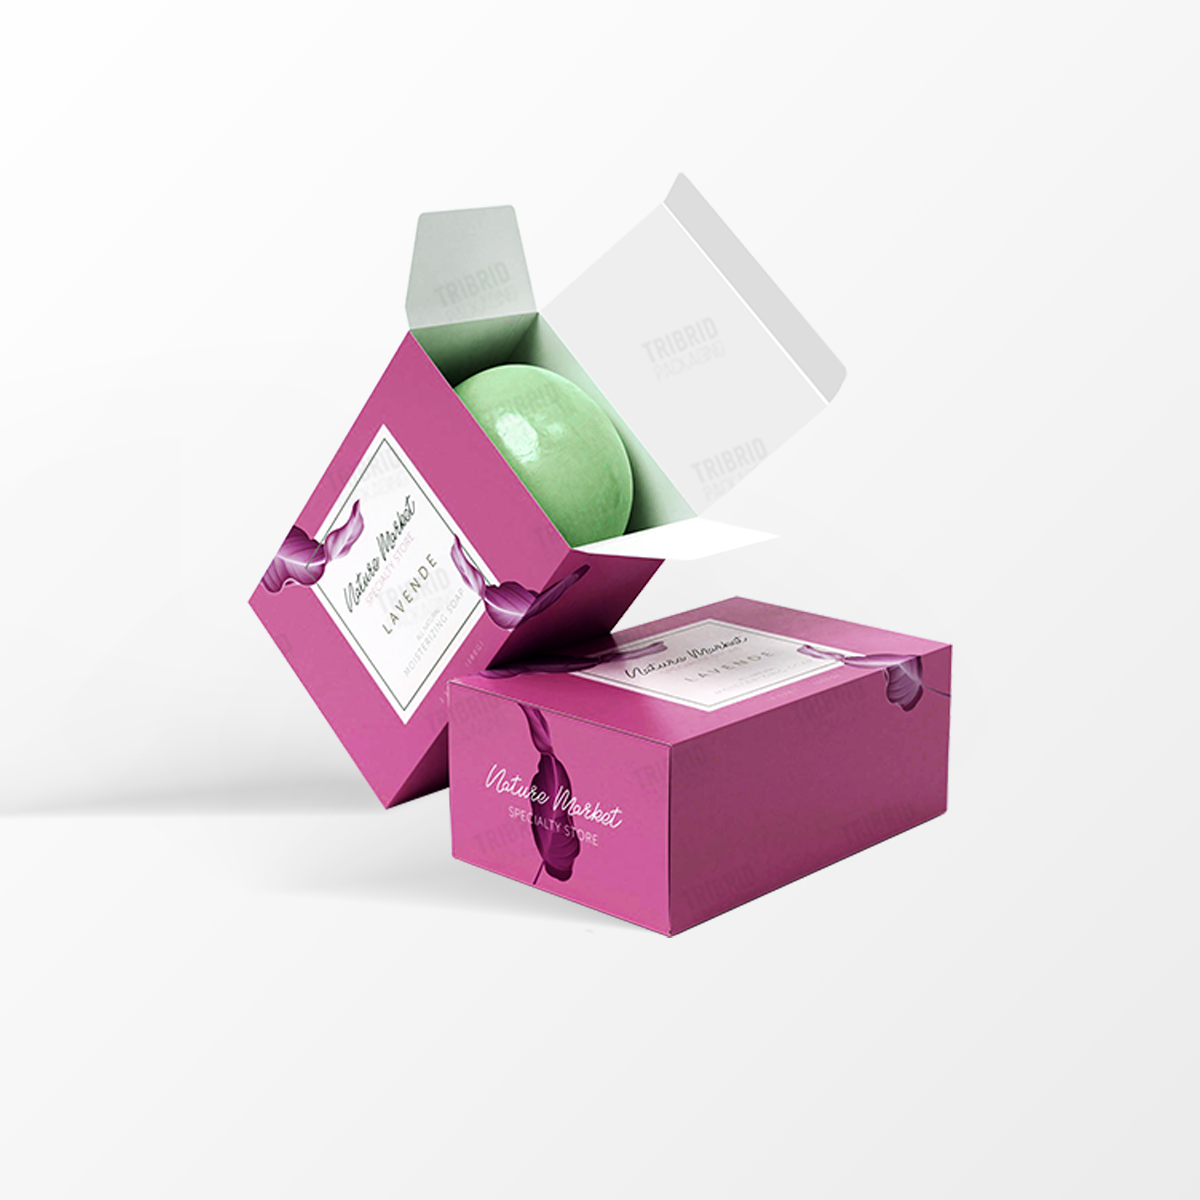 Library Box Branded Soap Gift Sets - Botanical PaperWorks